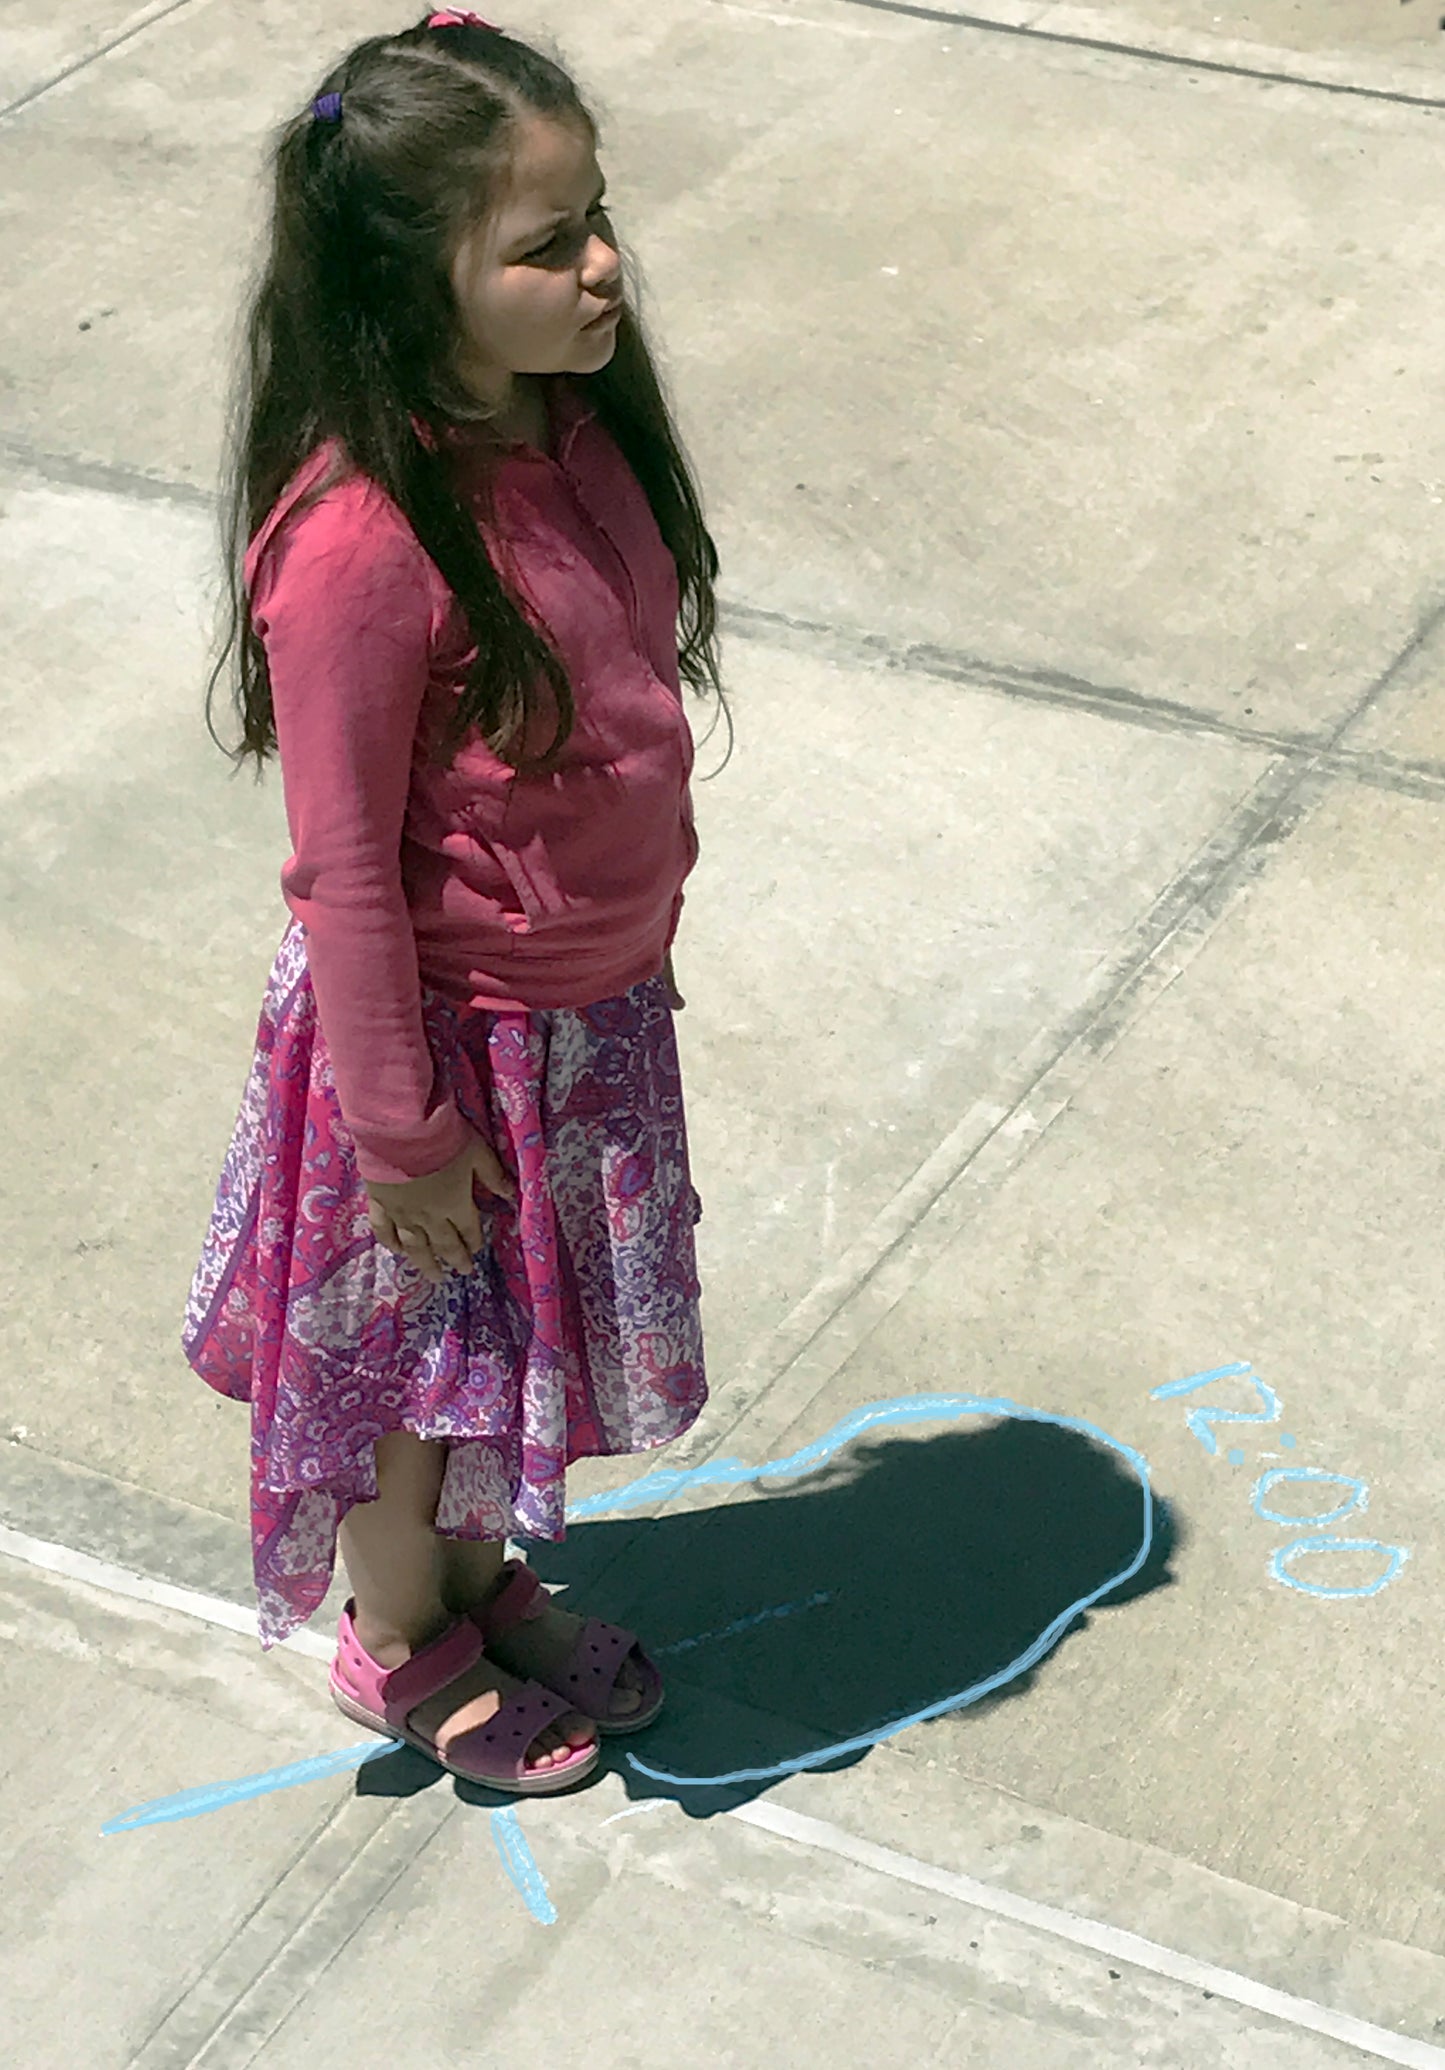 human sundial chalk activities summer fun for kids